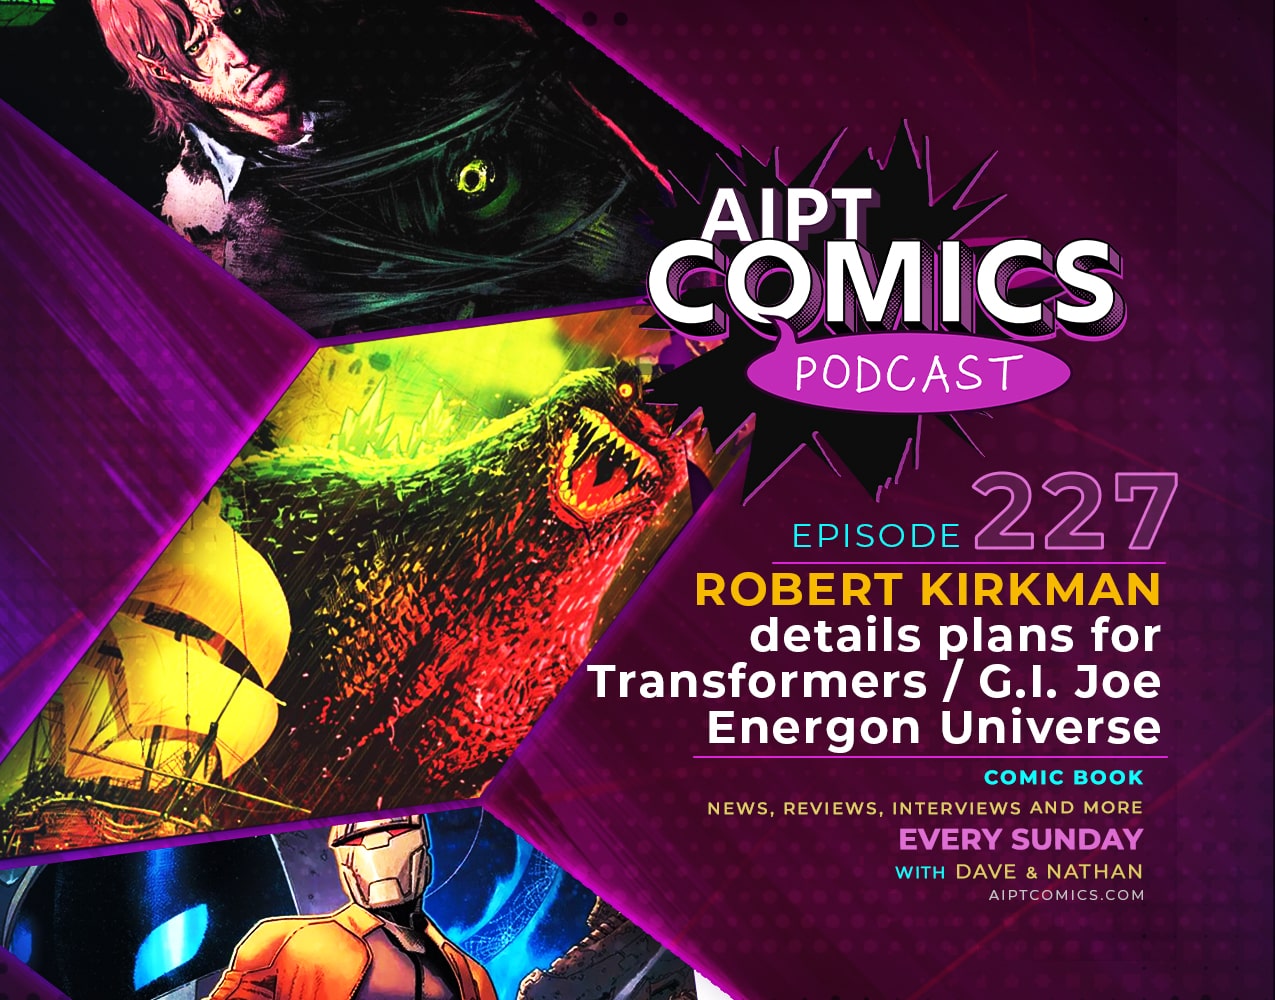 AIPT Comics Podcast episode 227: Robert Kirkman details plans for Transformers/G.I. Joe Energon Universe